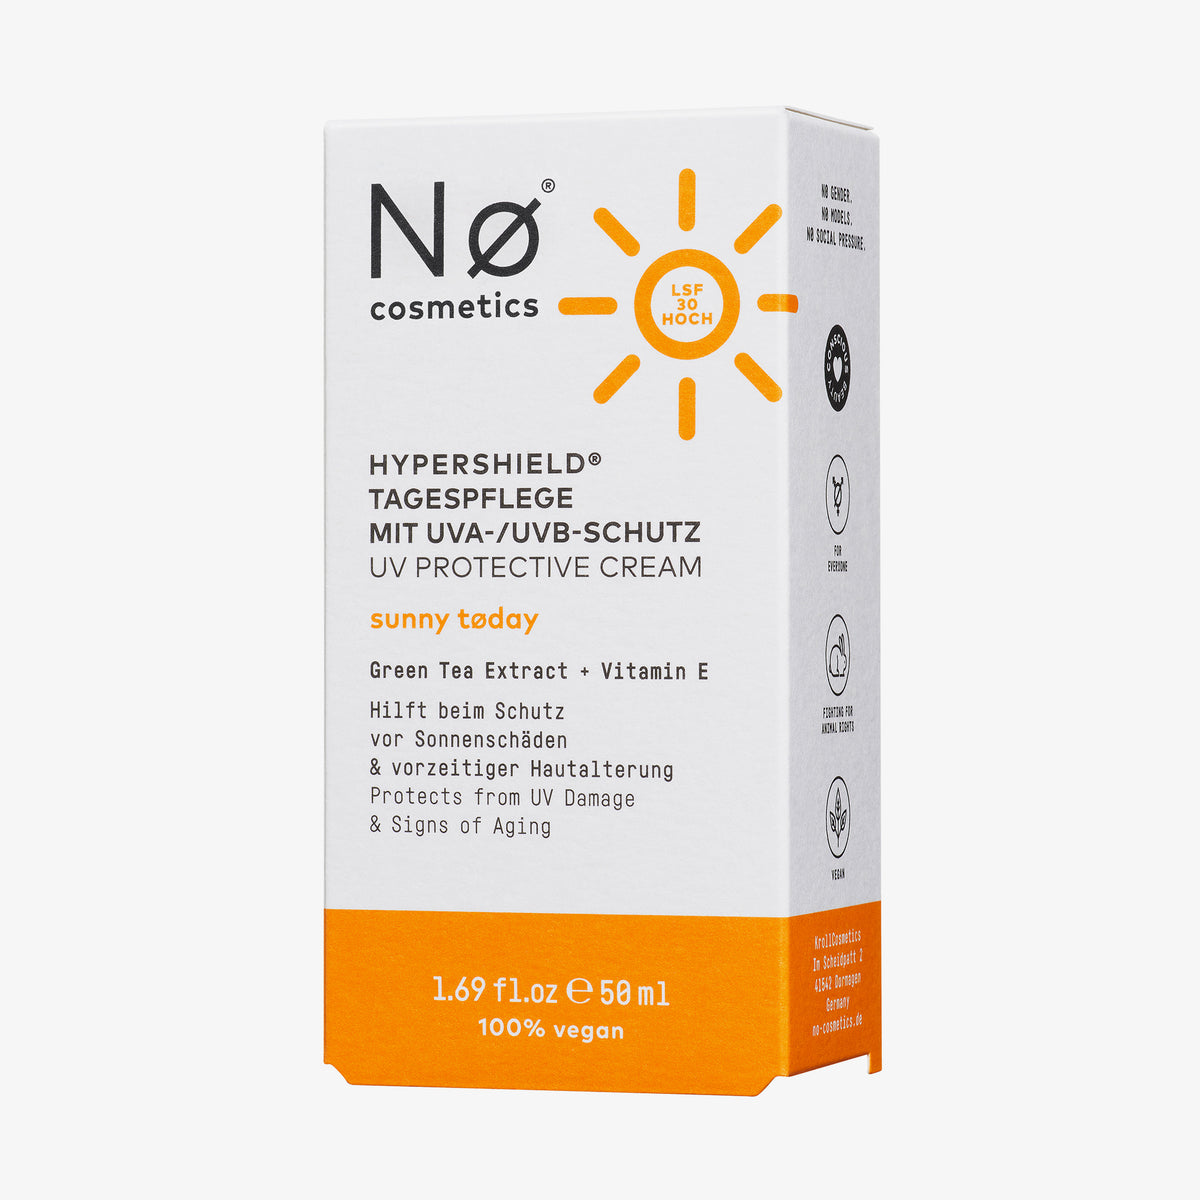 Nø Cosmetics | sunny tøday Hypershield®️ Tagespflege mit UVA-/UVB-Schutz